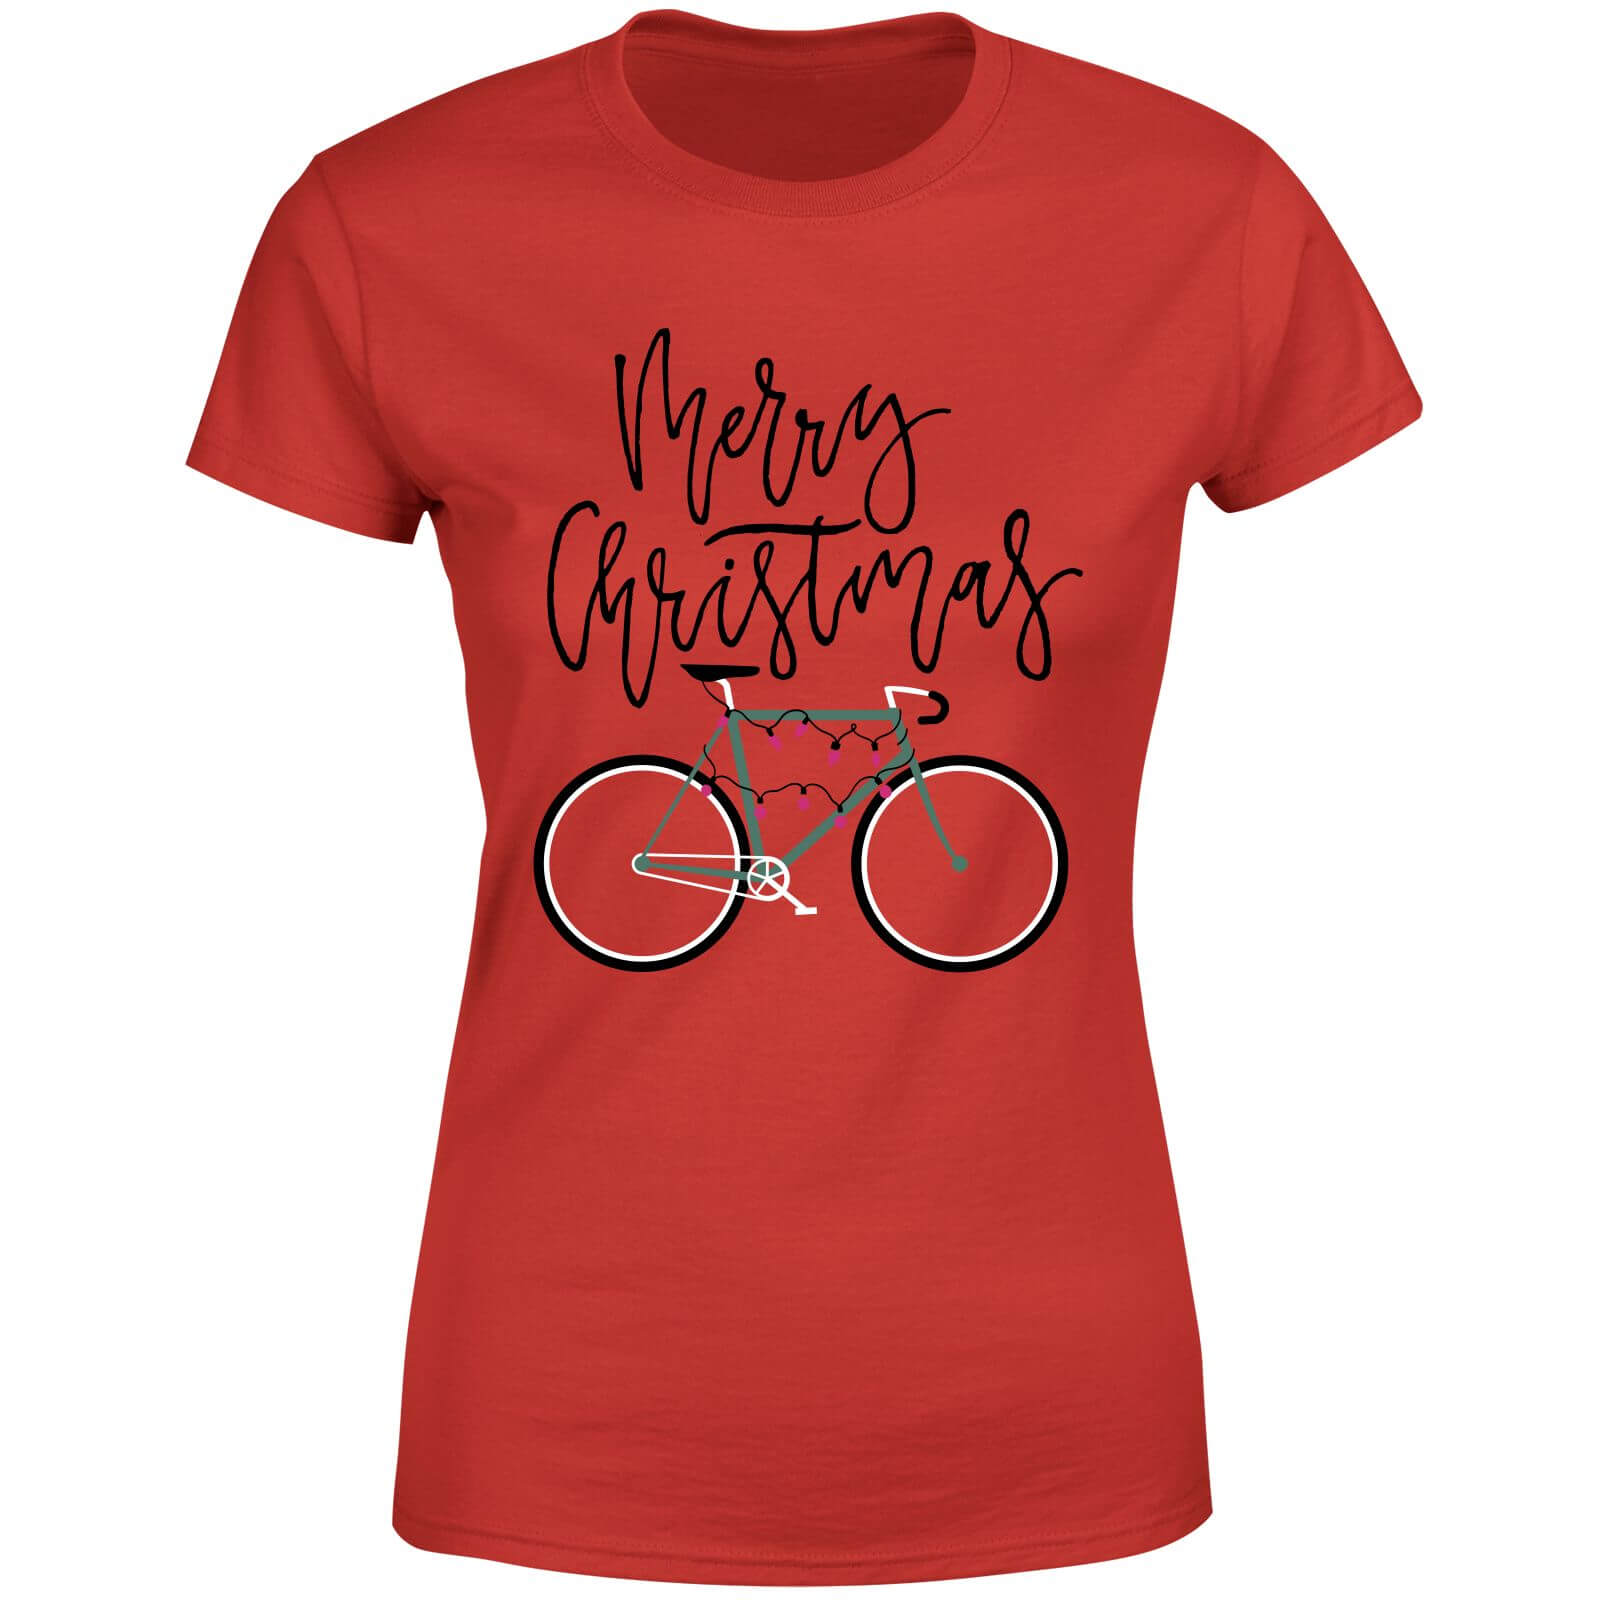 Bike Lights Women's Christmas T-Shirt - Red - XL